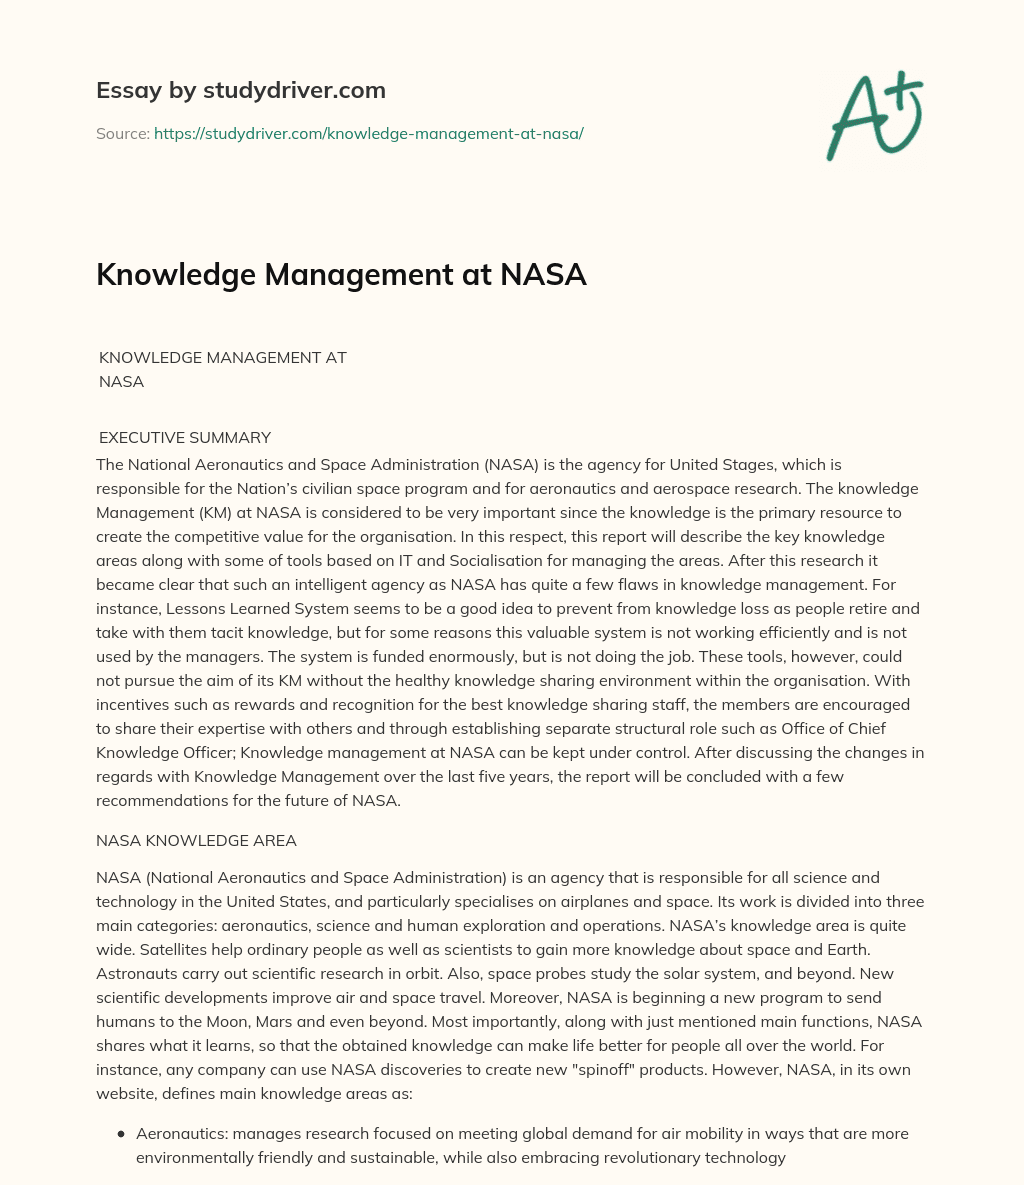 Knowledge Management at NASA essay